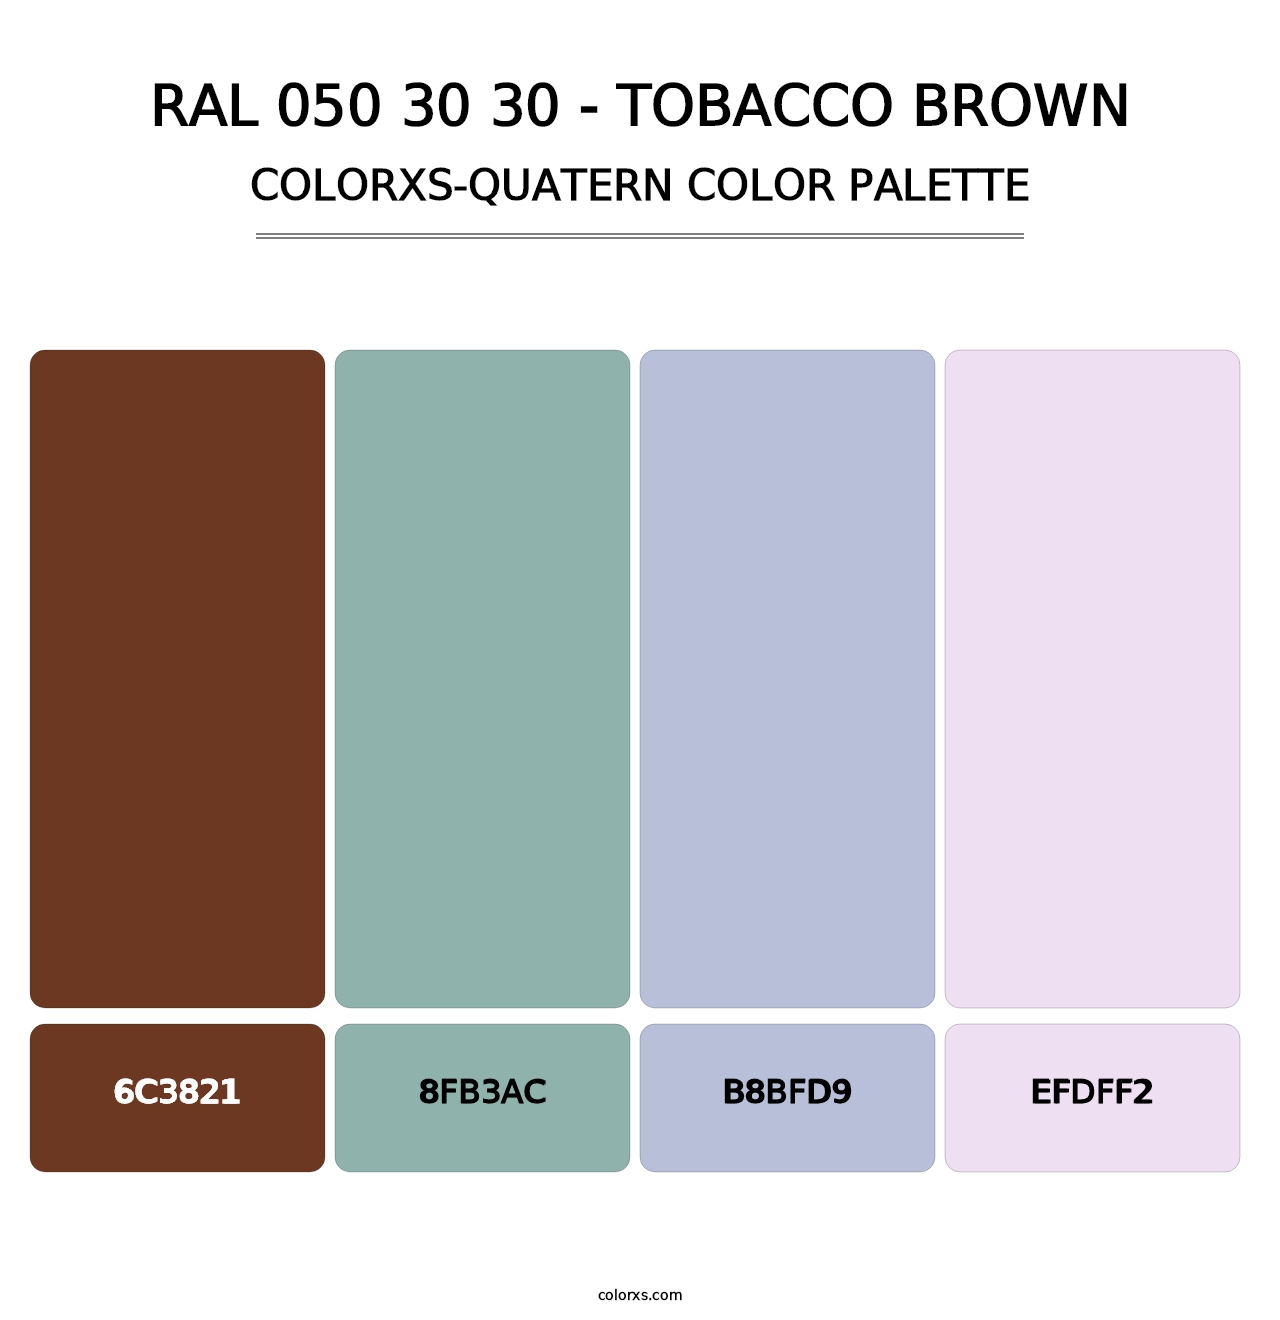 RAL 050 30 30 - Tobacco Brown - Colorxs Quatern Palette